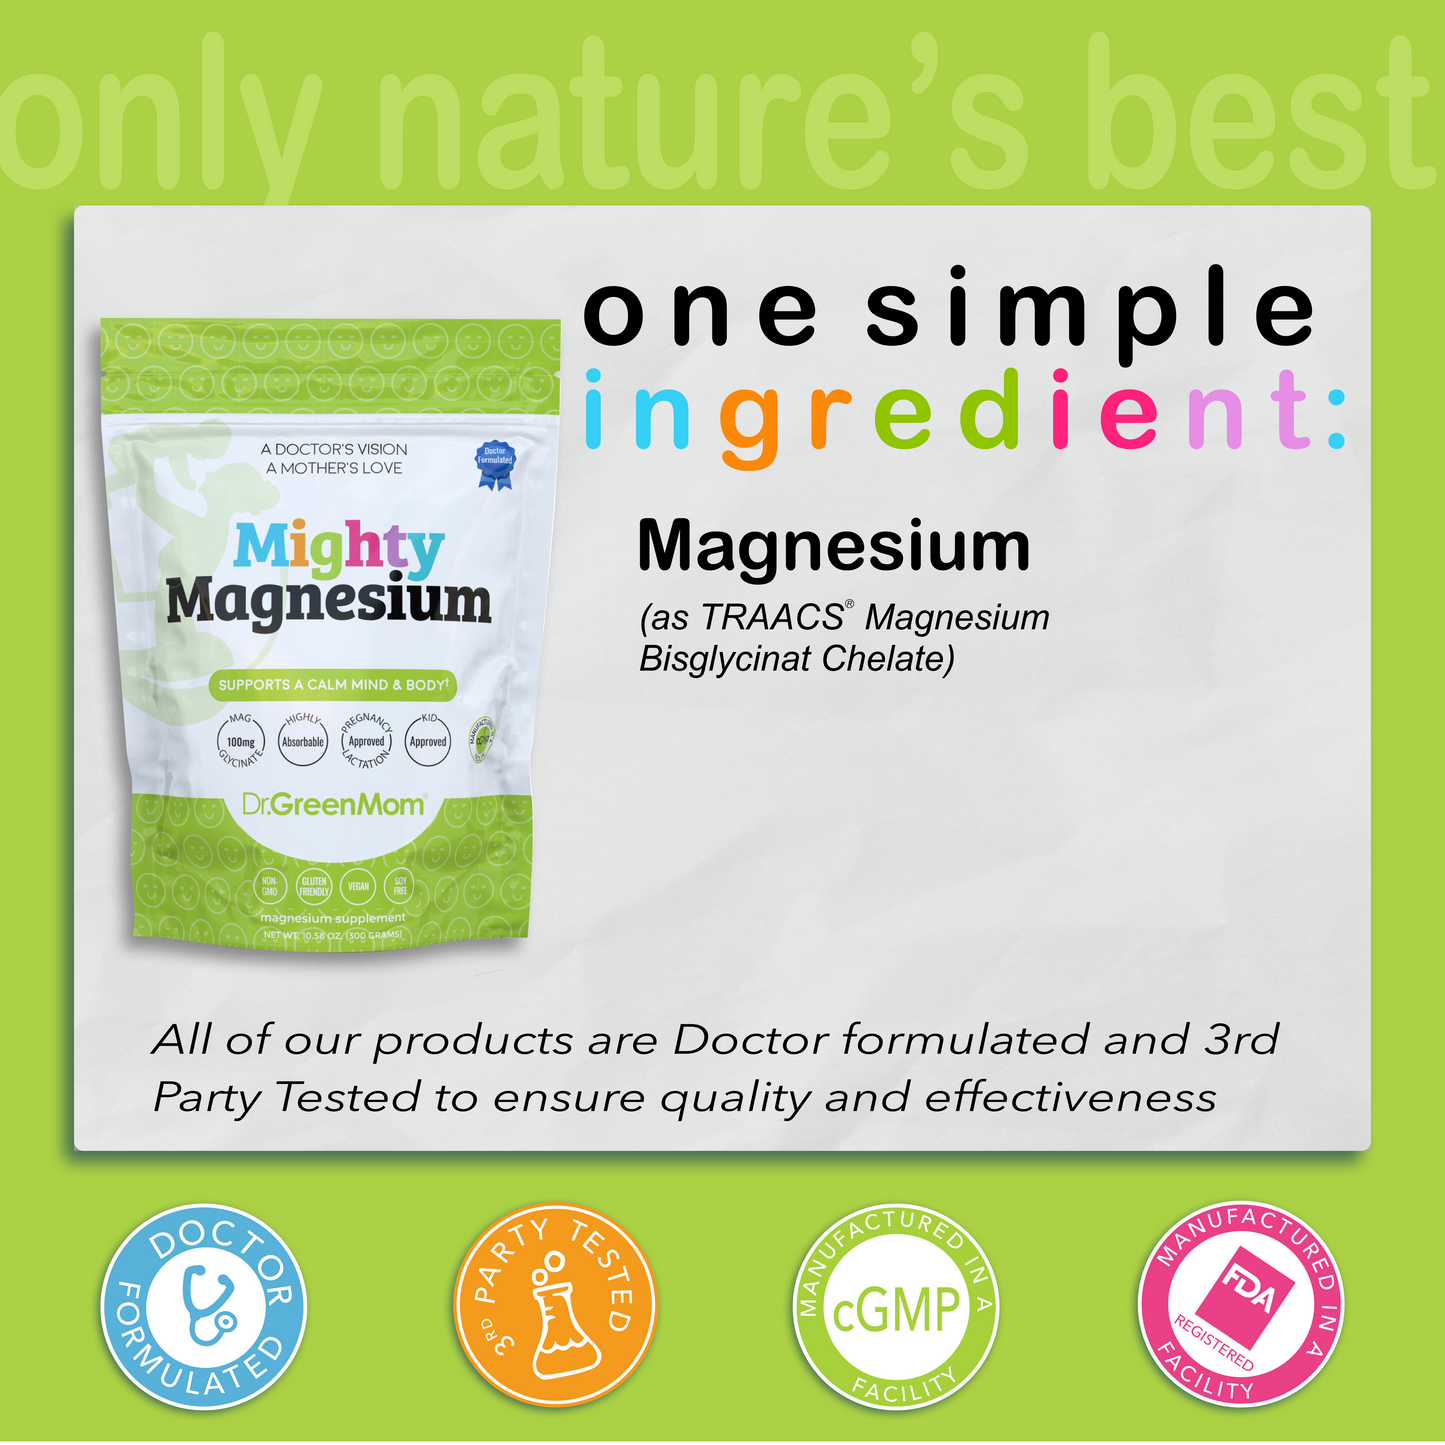 Mighty Magnesium™